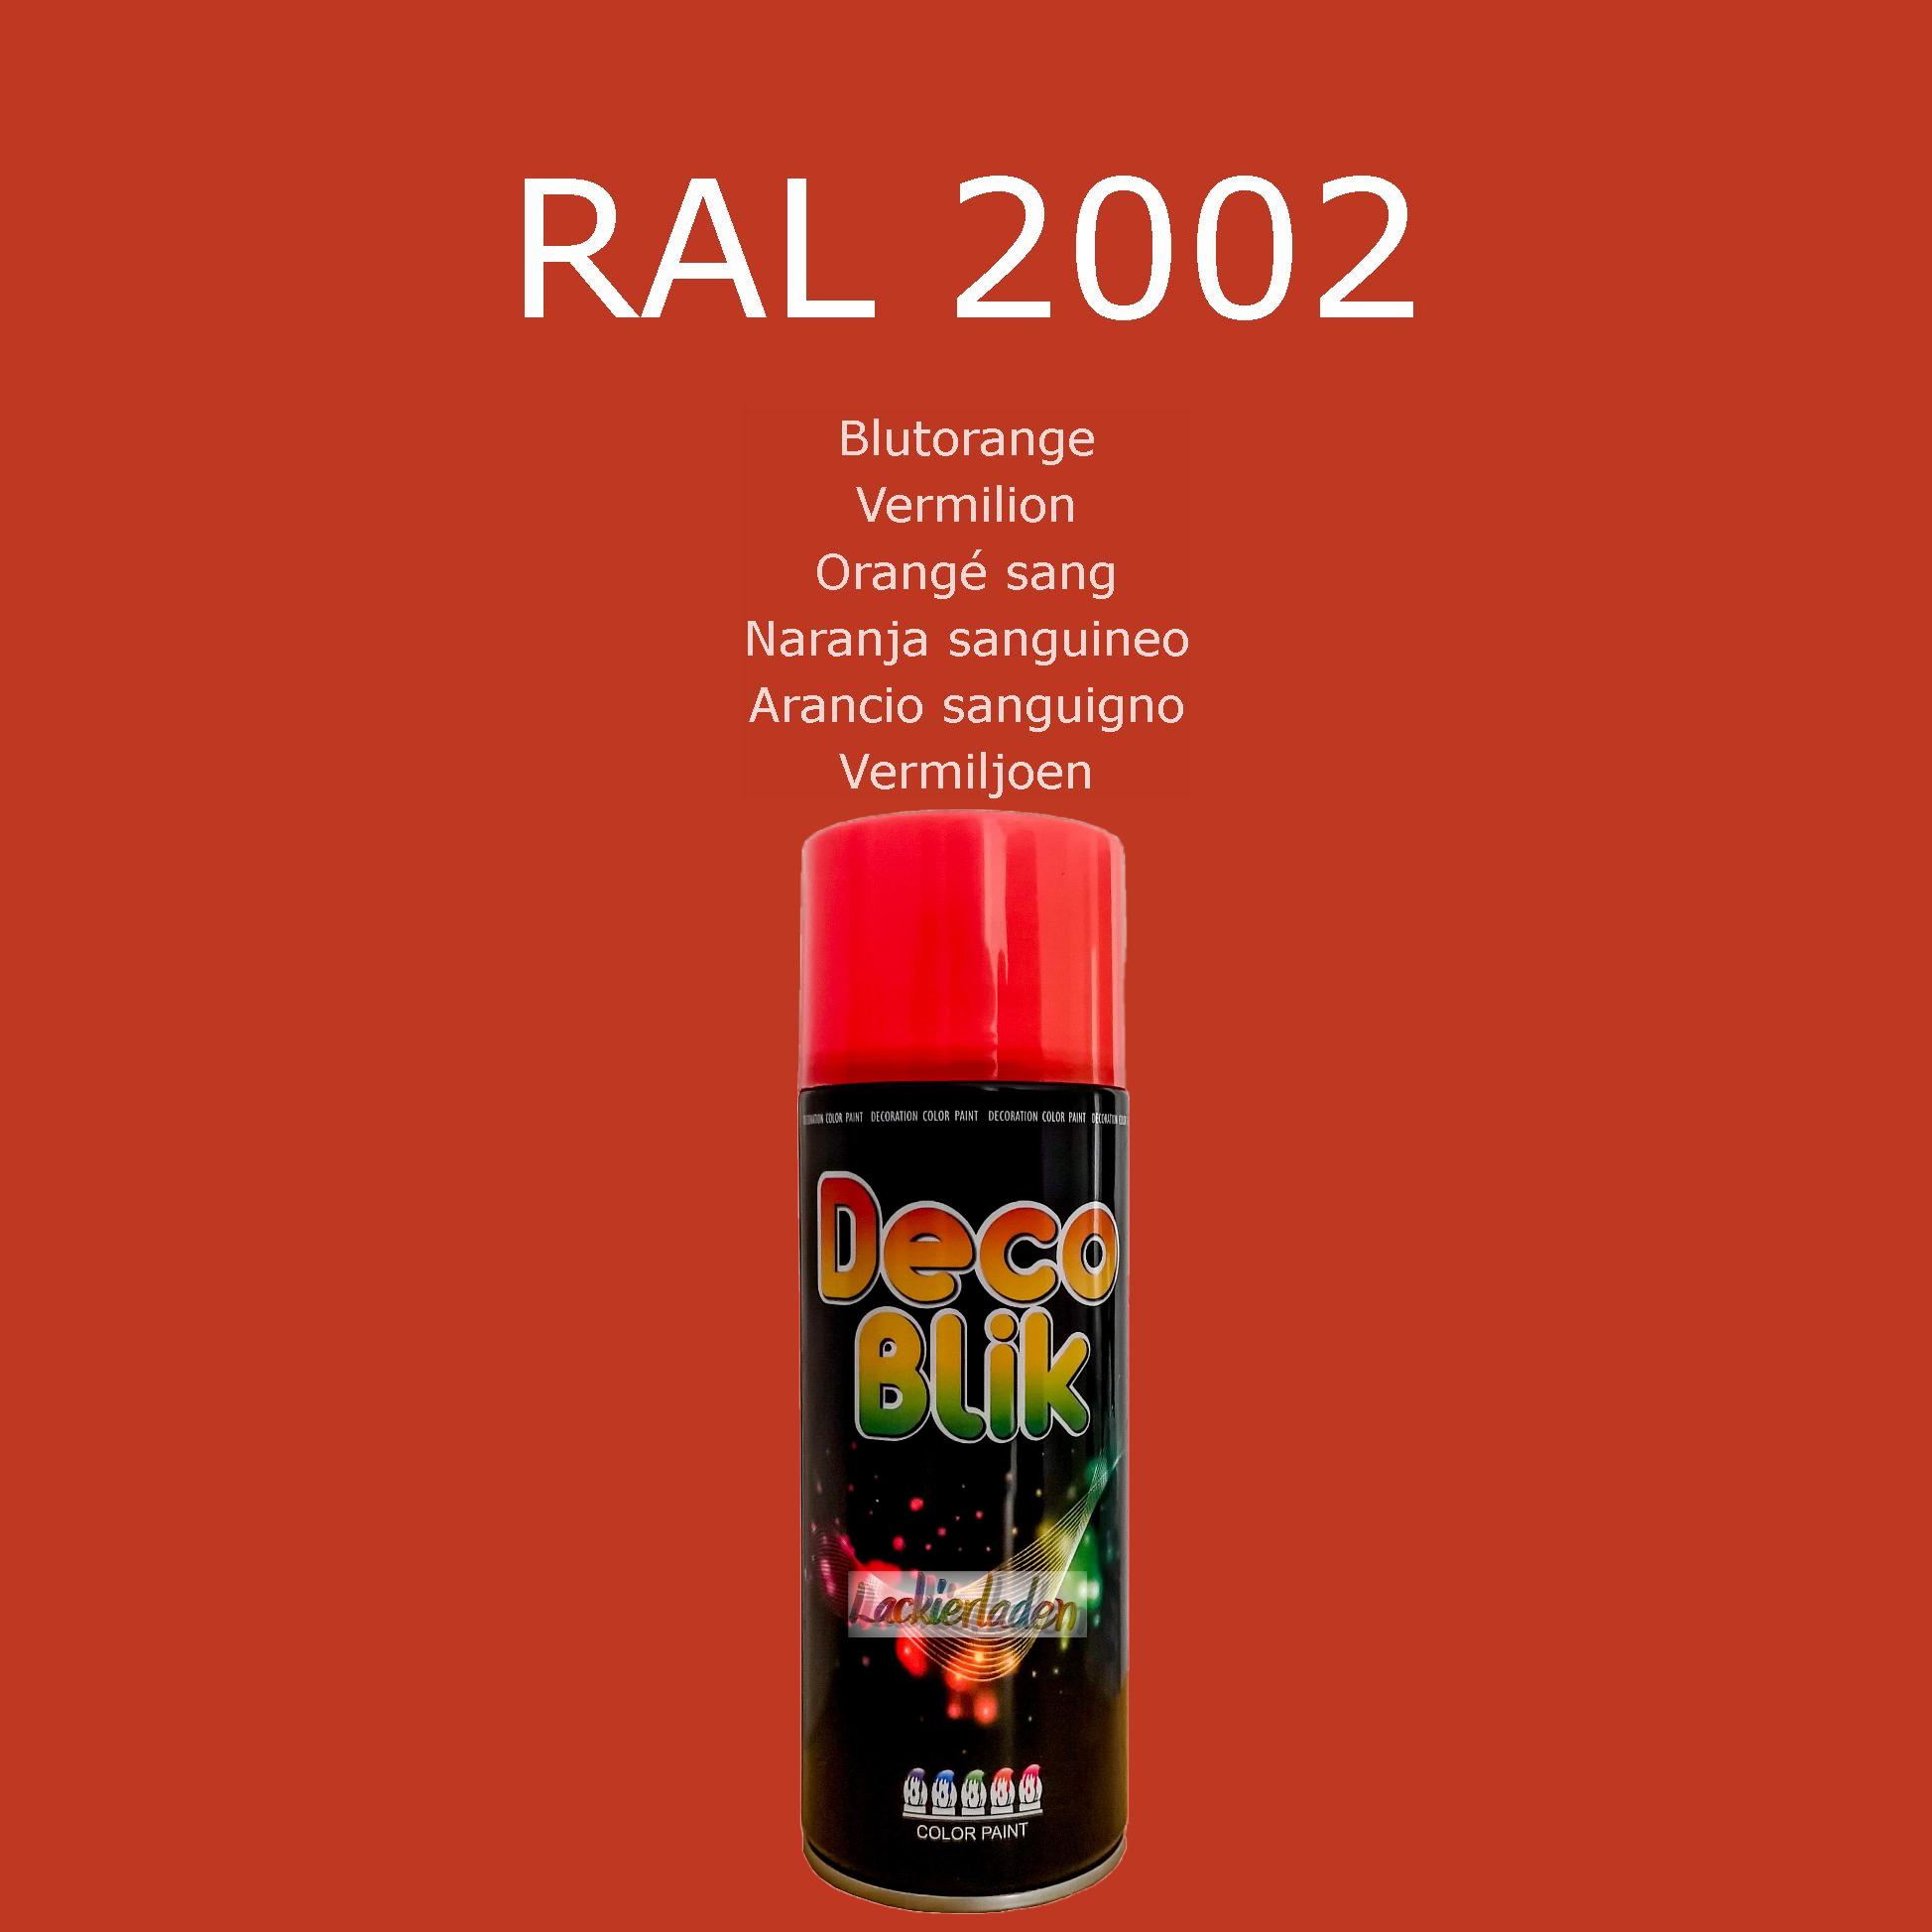 Zollex Decolack Spraydose 400 ml RAL 2002 Blutorange Vermilion Orangé sang Naranja sanguineo Arancio sanguigno Vermiljoen | Dekolack Lackspray Sprüh Dose